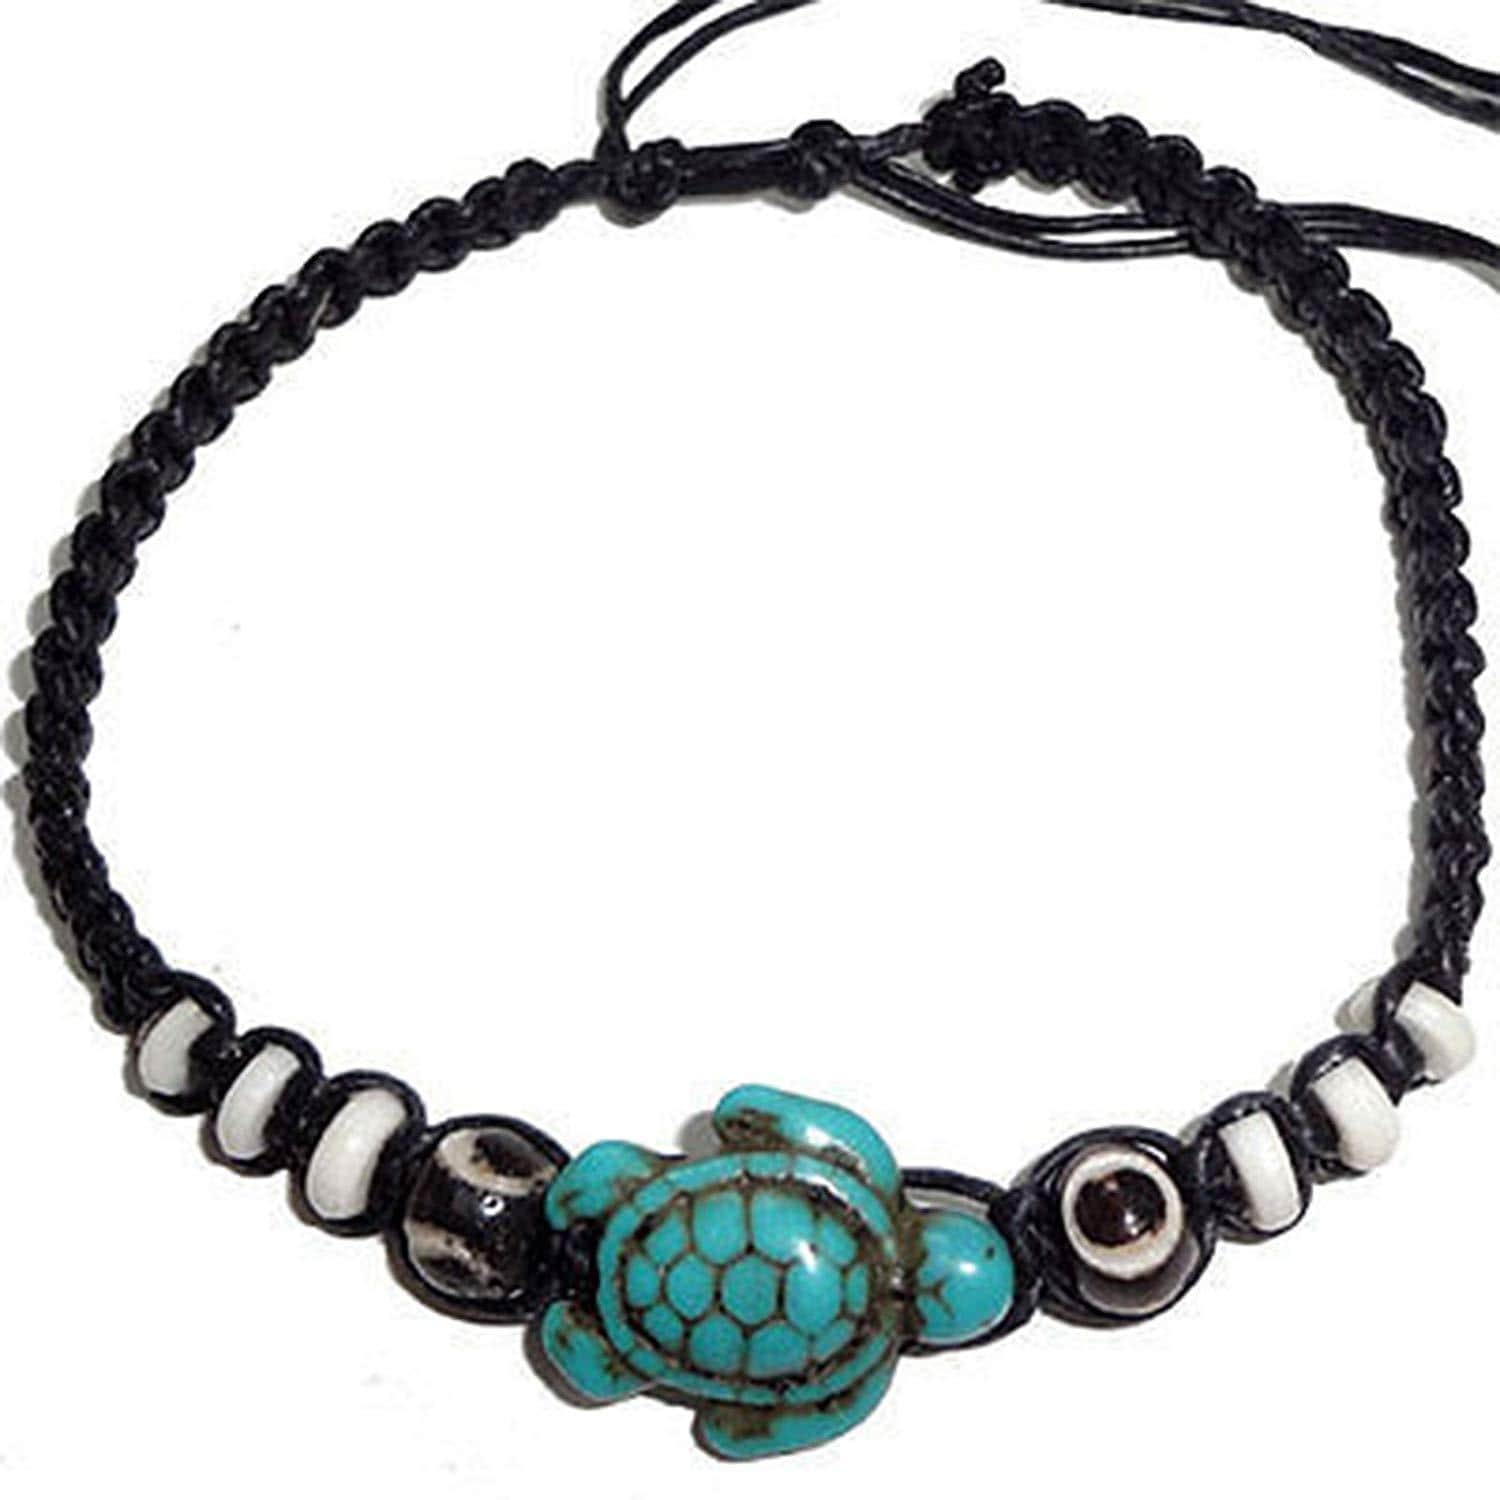 Turquoise Turtle Wristband Charm Bracelet Tortoise Bangle Mens Womens Girls Boys